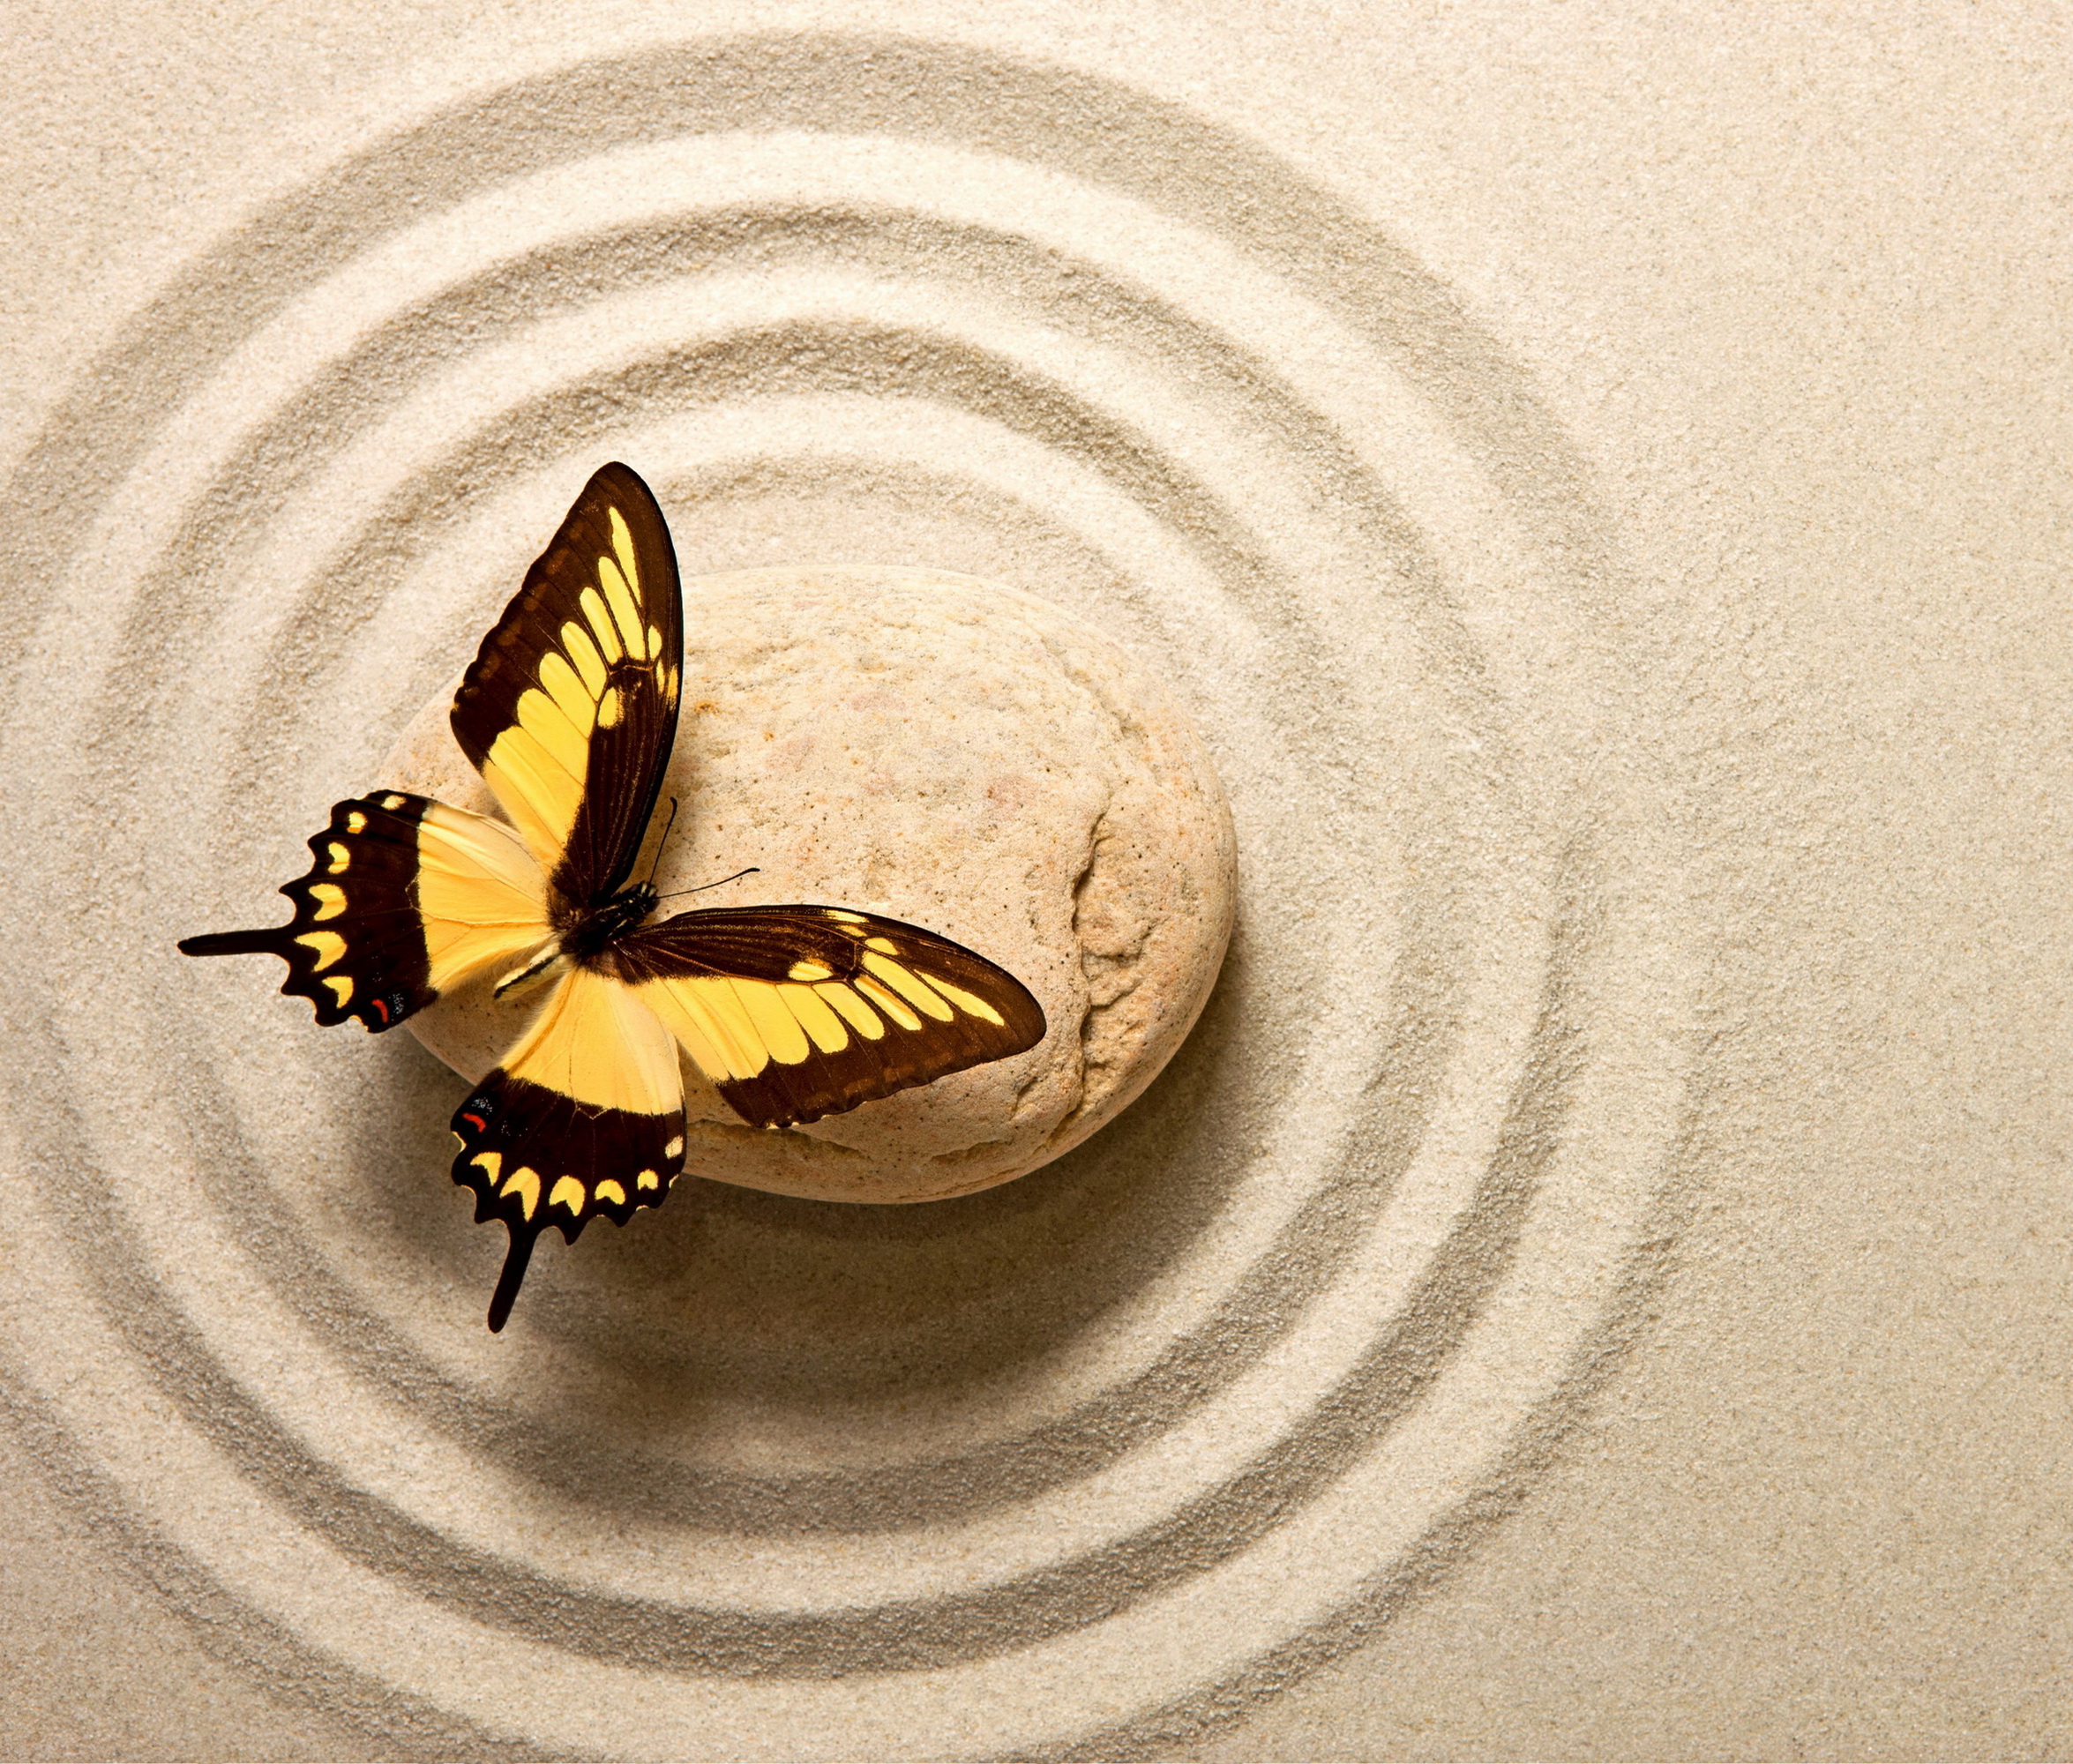 zen_butterfly_stone_animals_butterflies_hd-wallpaper-1718058.jpg